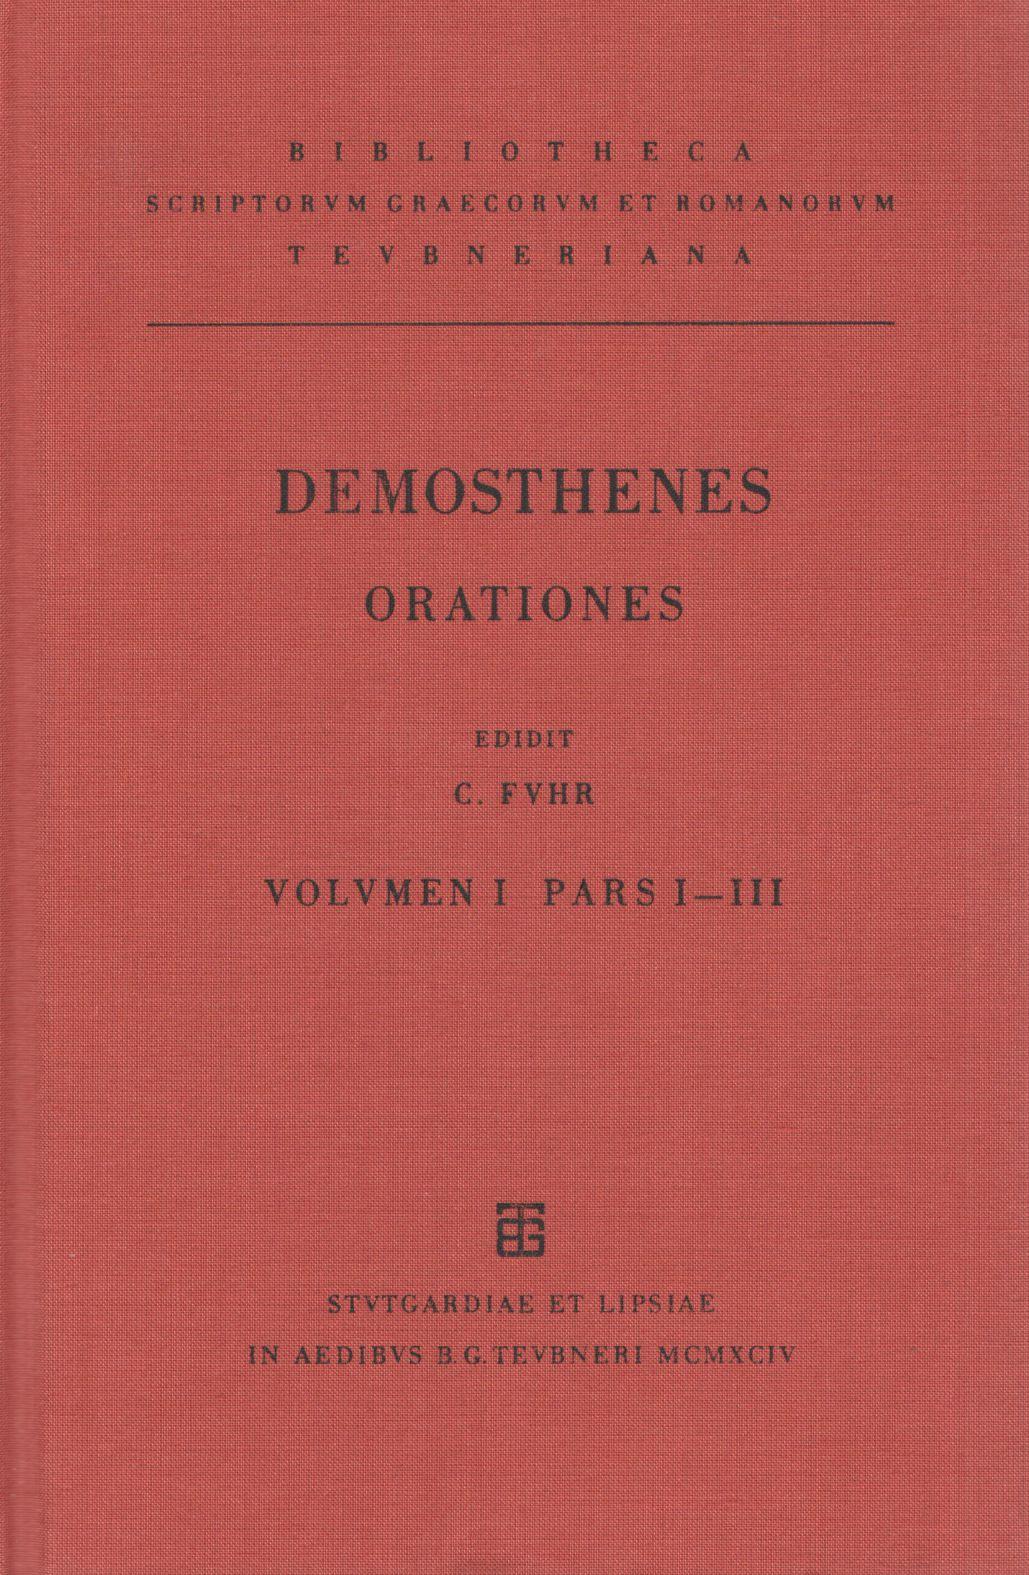 DEMOSTHENIS ORATIONES VOLUME I/PARS I-III